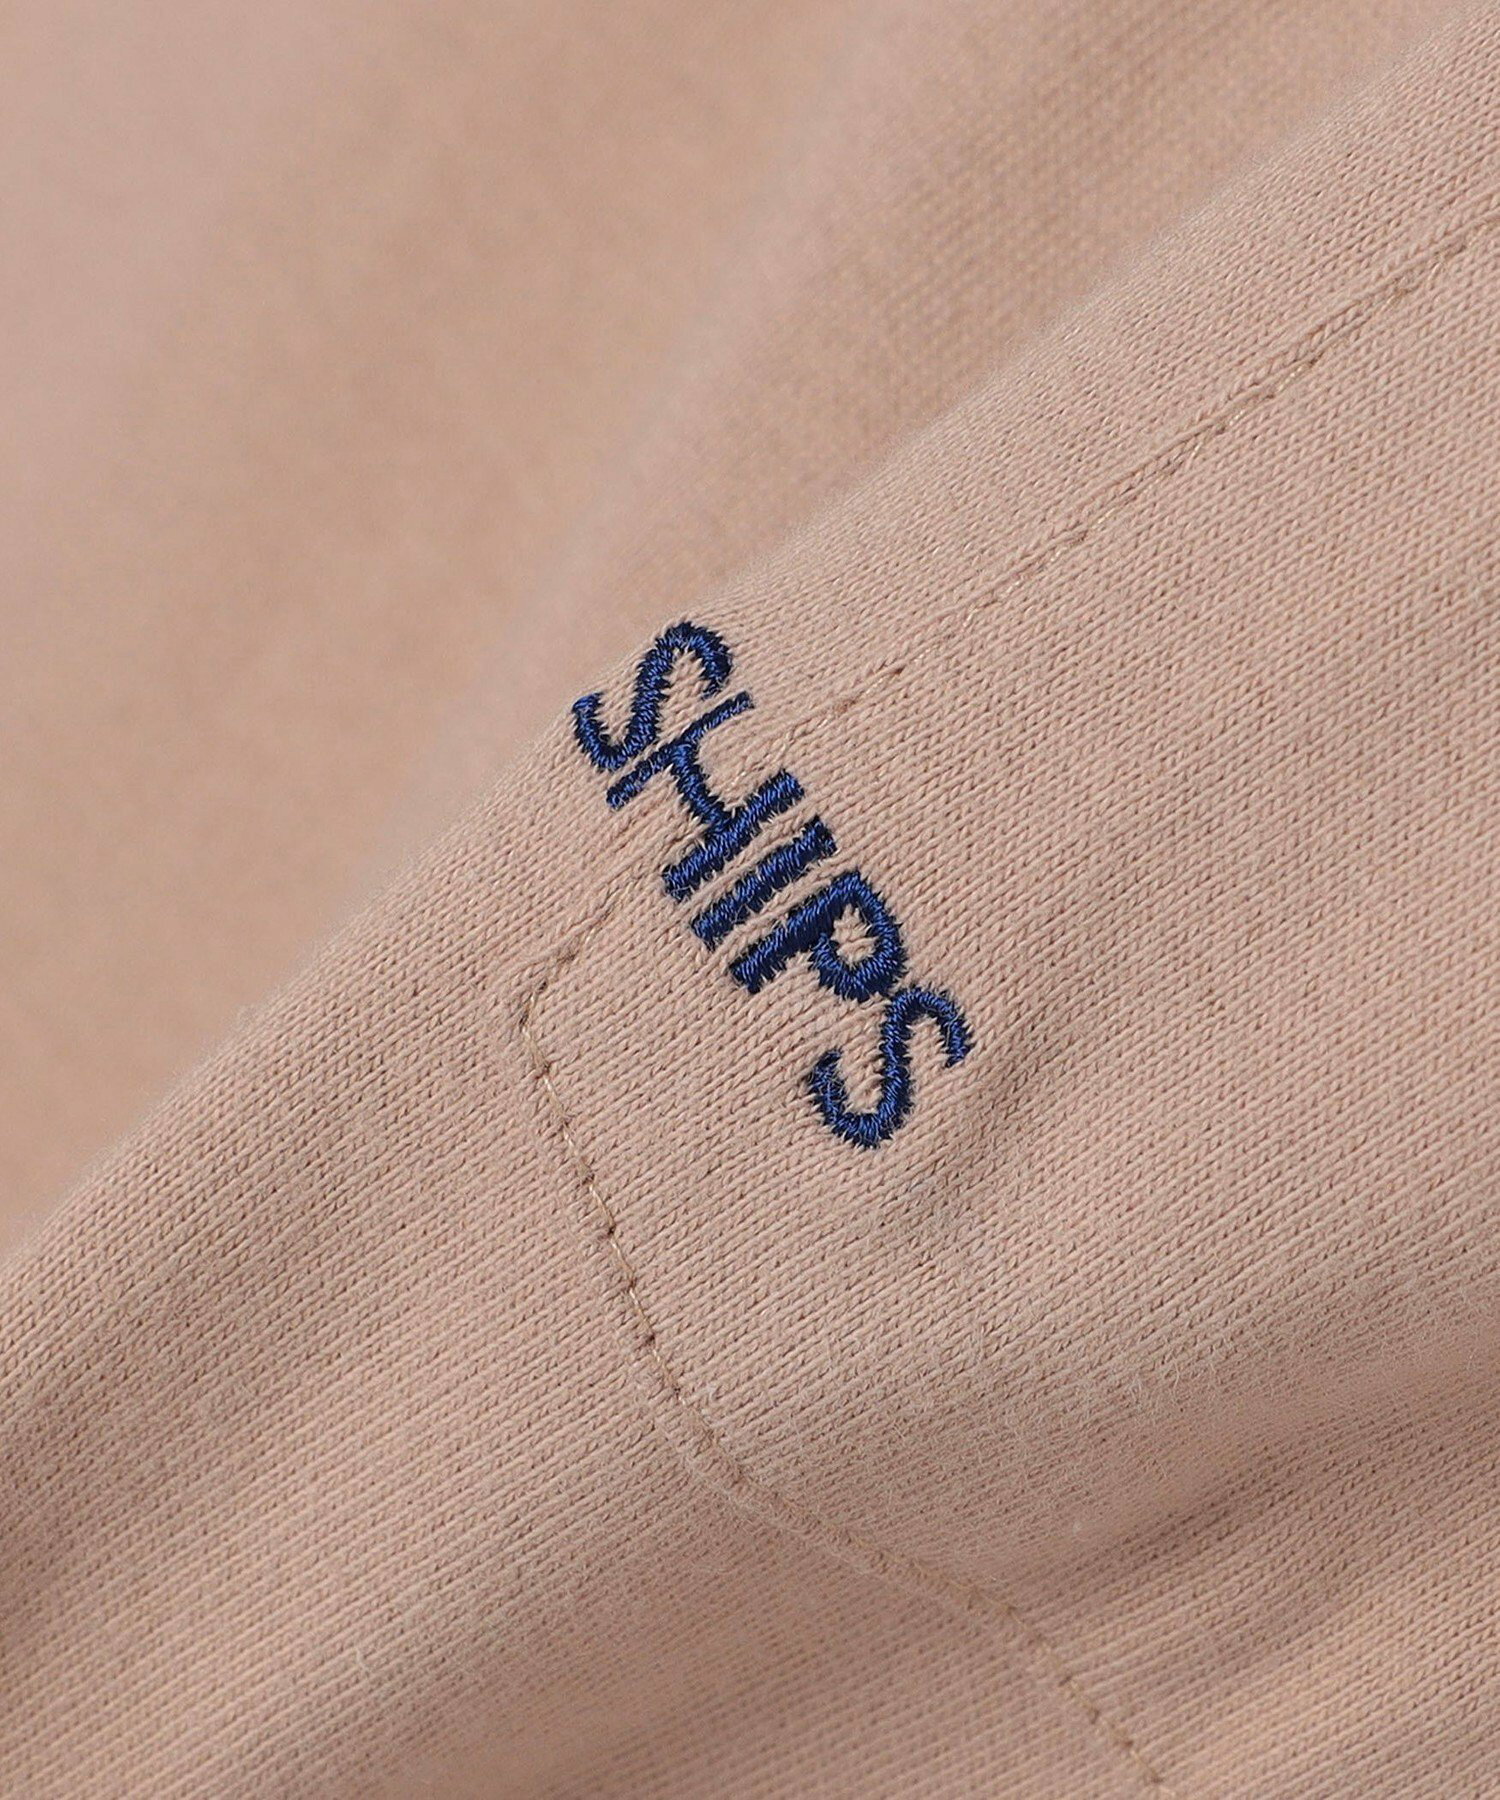 *SHIPS: マイクロ SHIPSロゴ ポケット Tシャツ